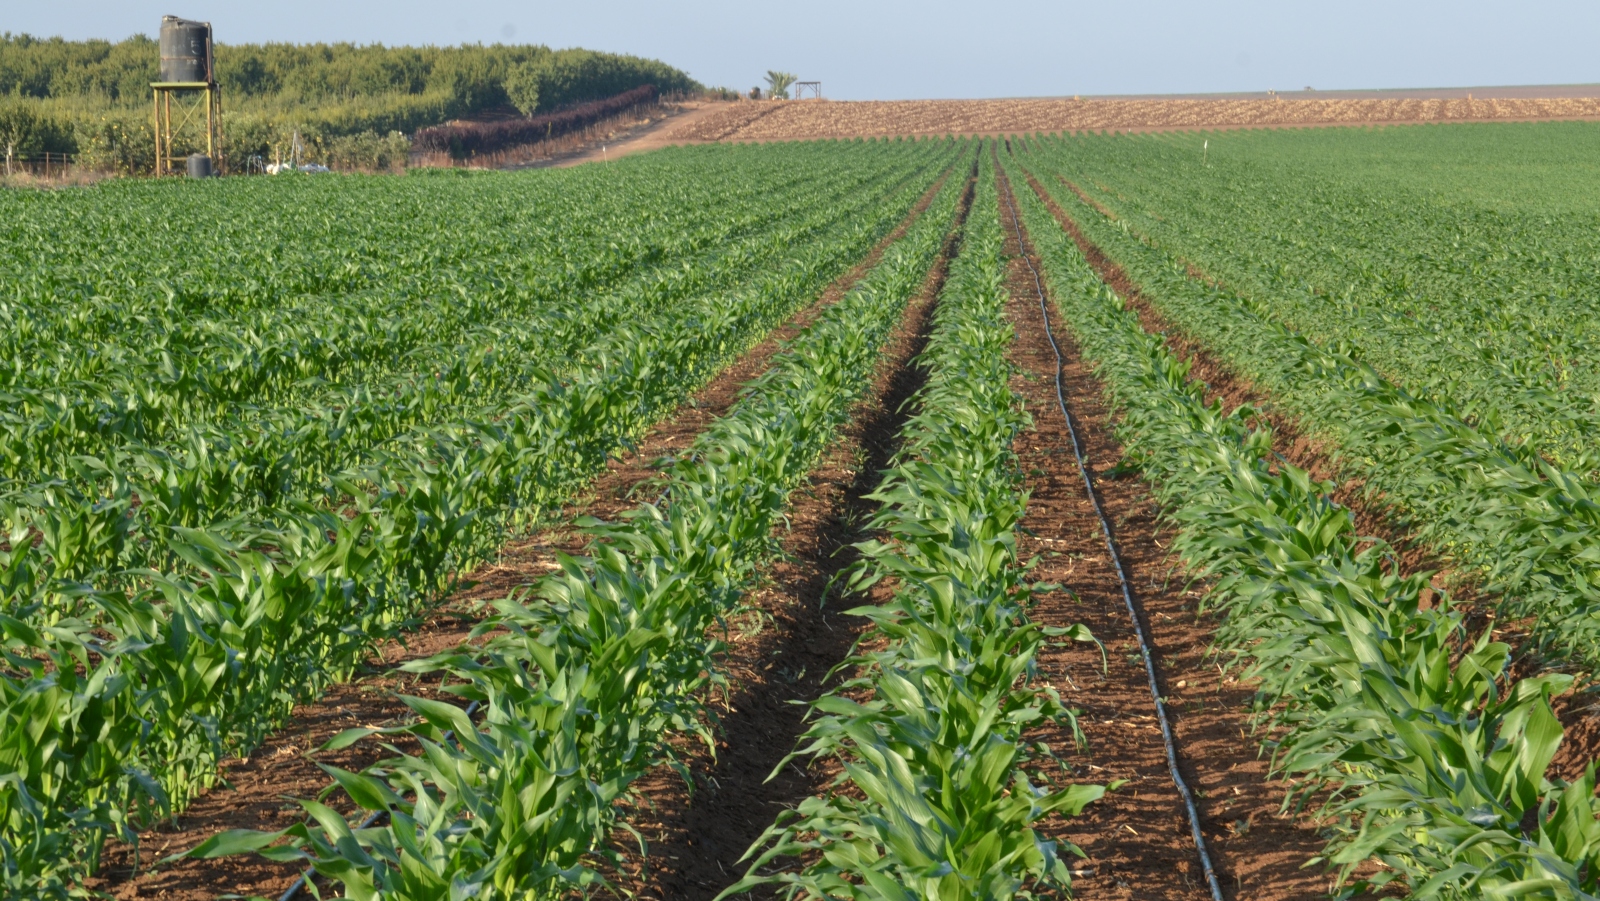 A cornfield in Israel. Photo courtesy of Netafim